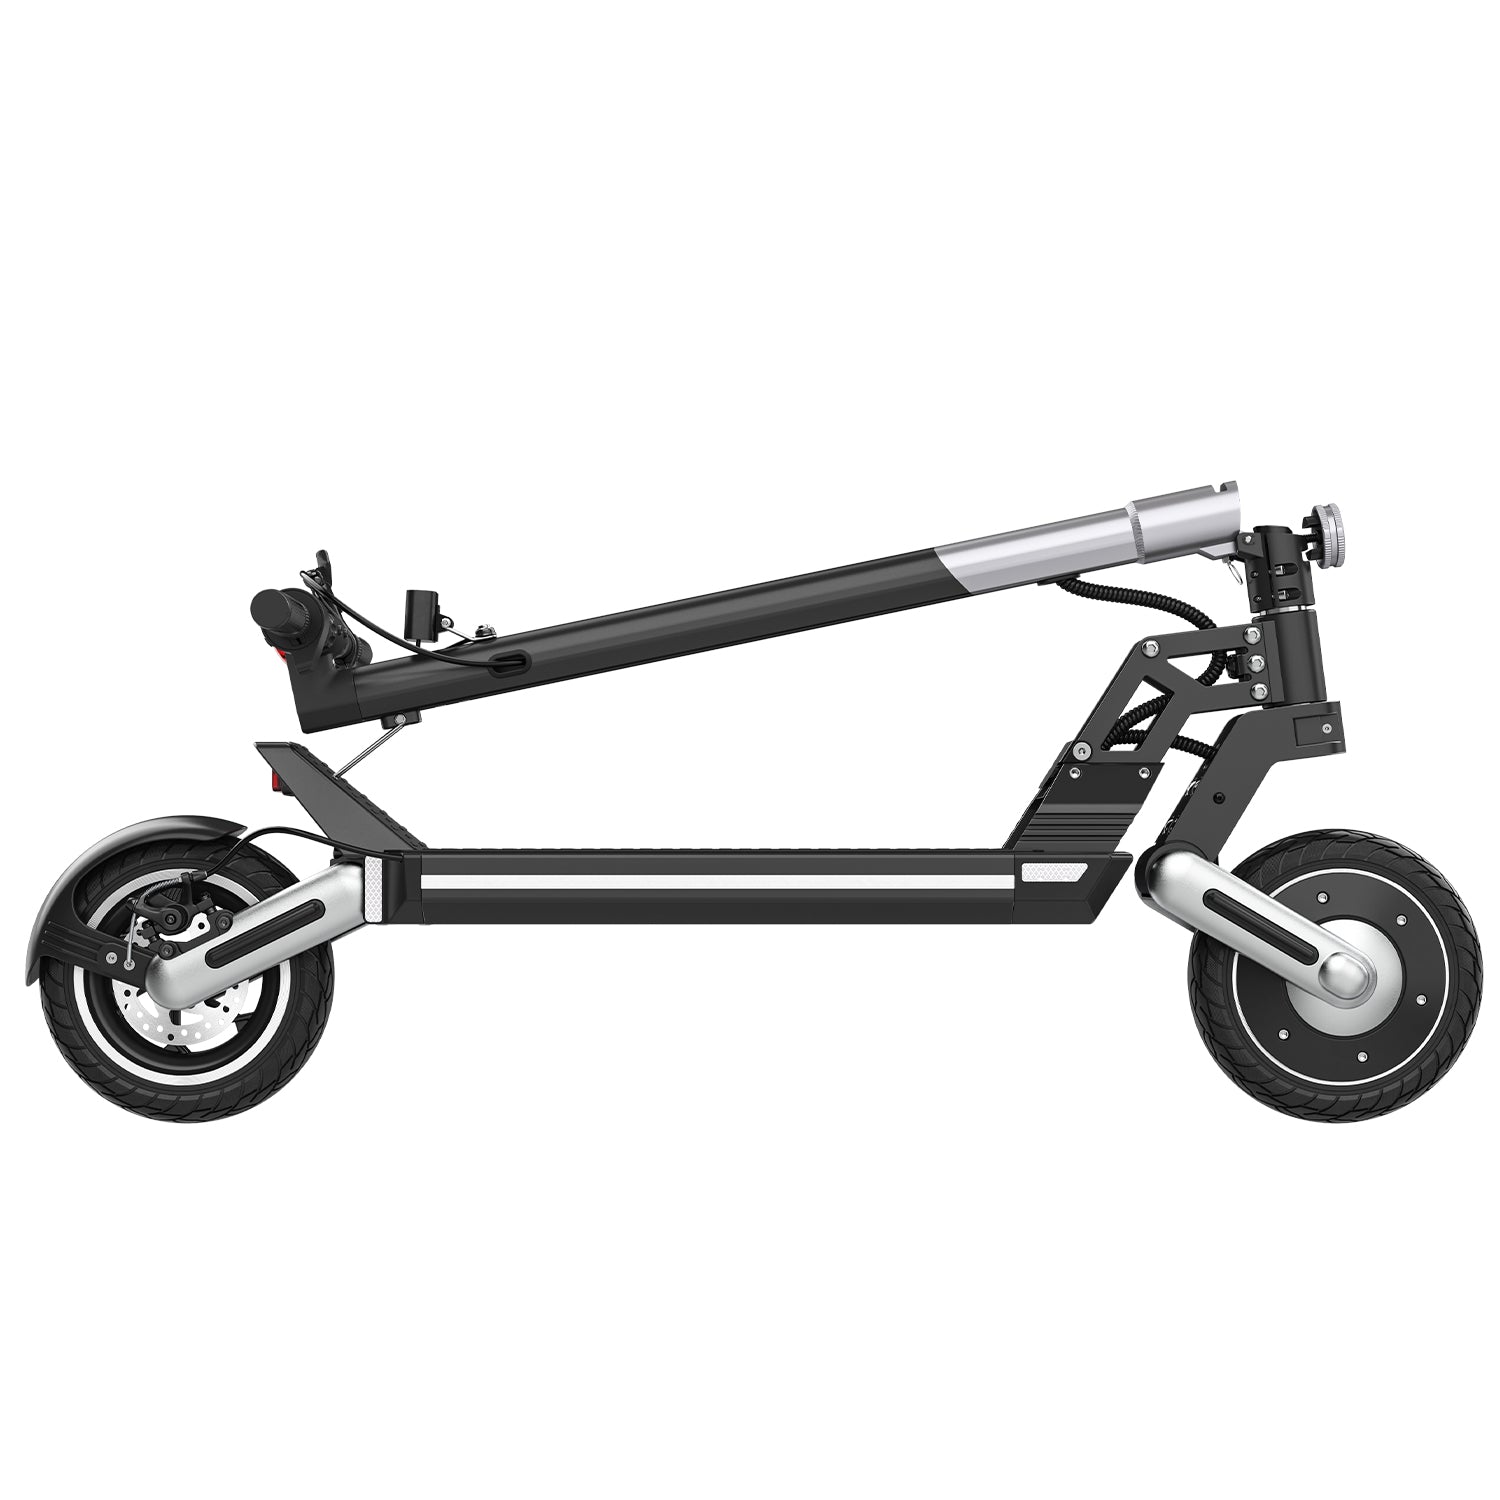 IENYRID M8 500W motor 10 inch off-road elektrische scooter 10Ah batterij